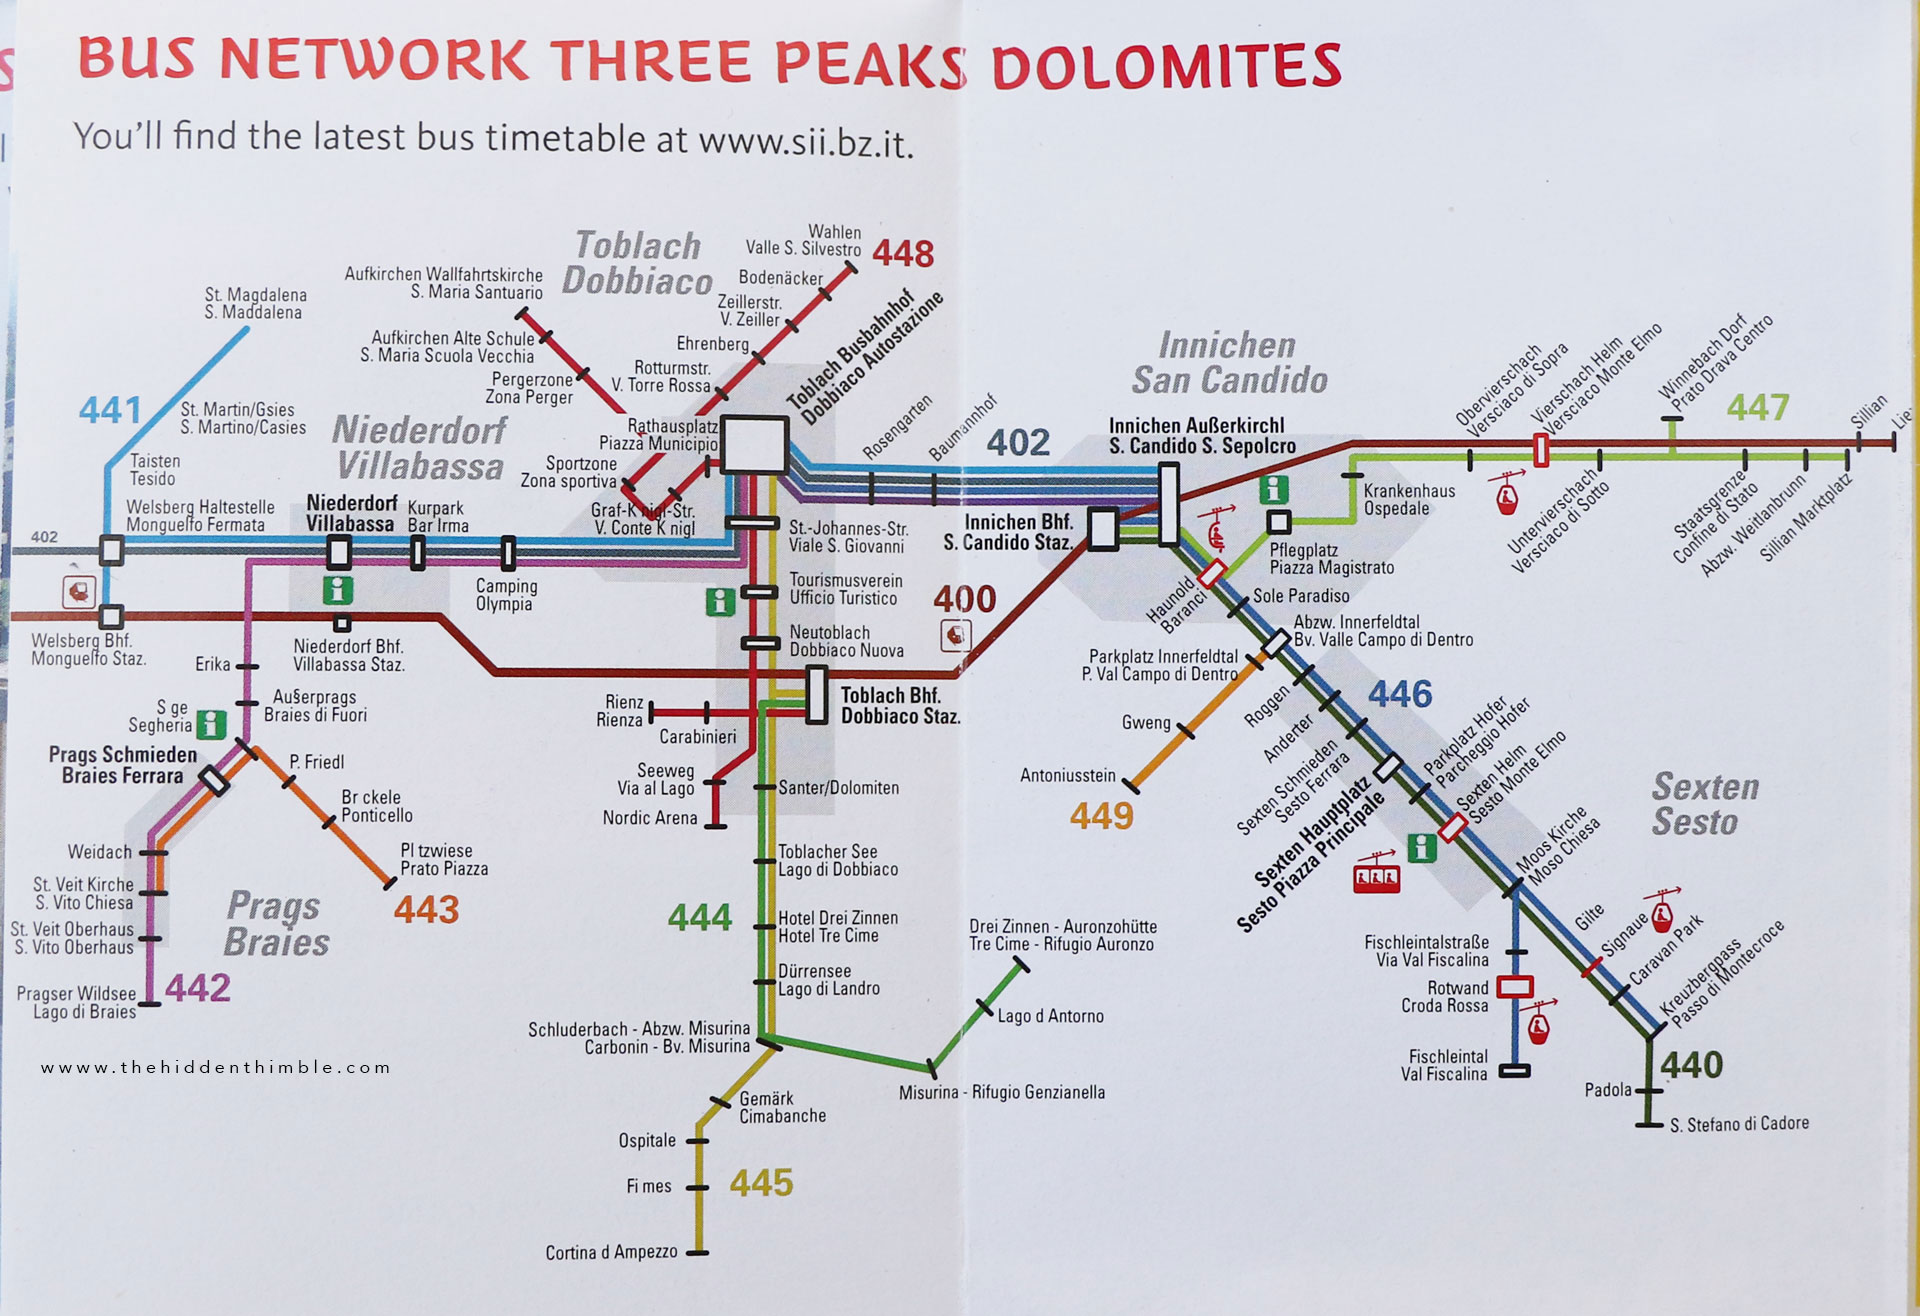 Dolomites Bus Network Map